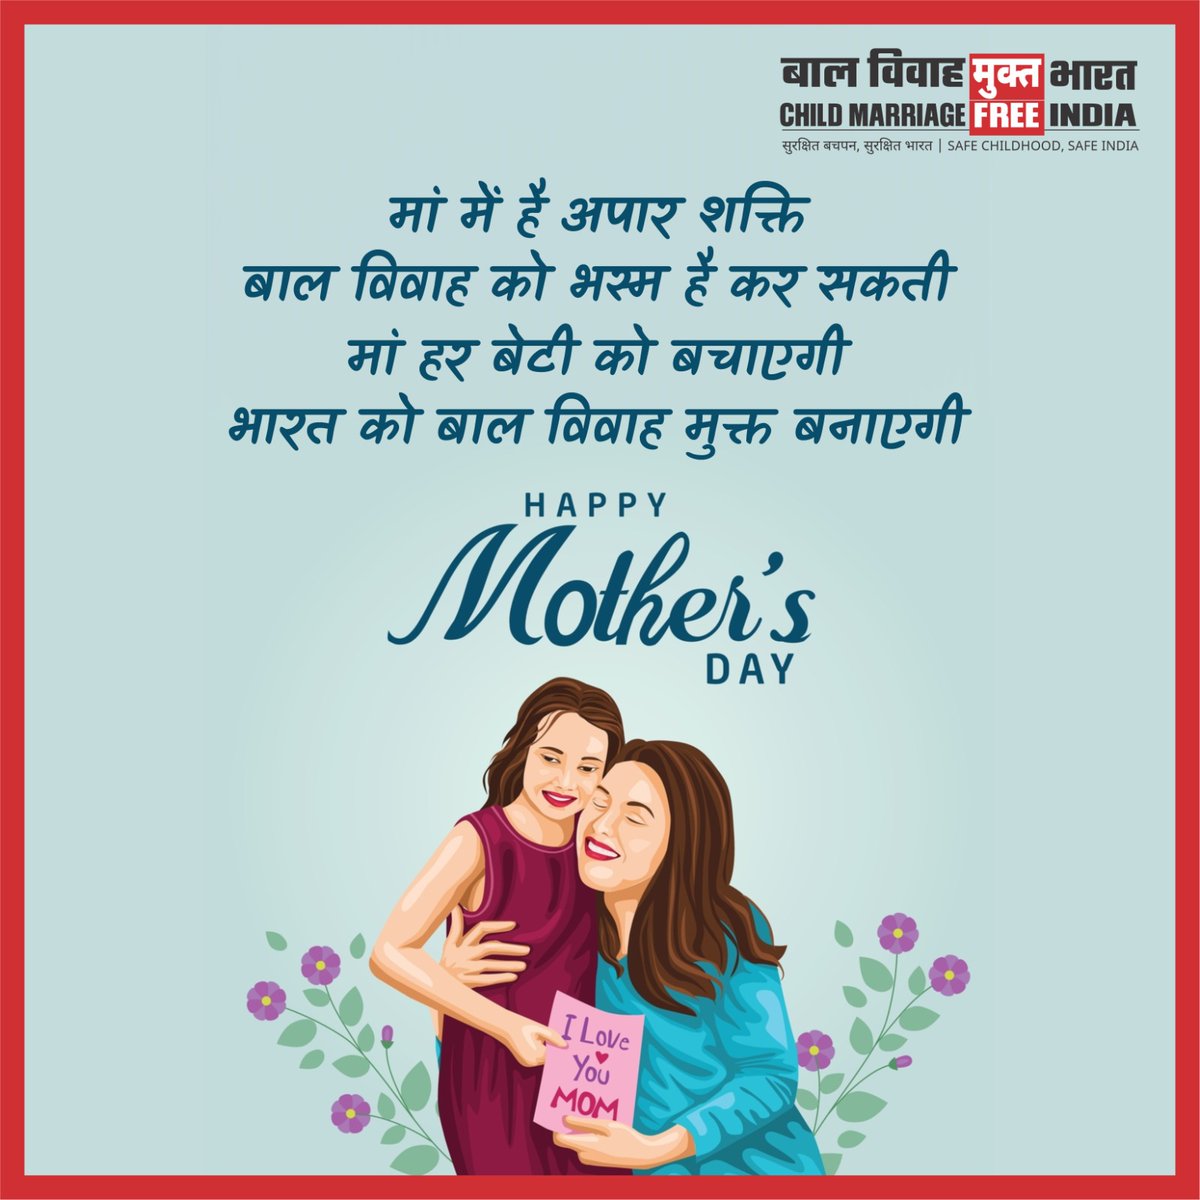 Happy Mother's Day! #MothersDay #ChildMarriageFreeIndia #Balvivahseazadi